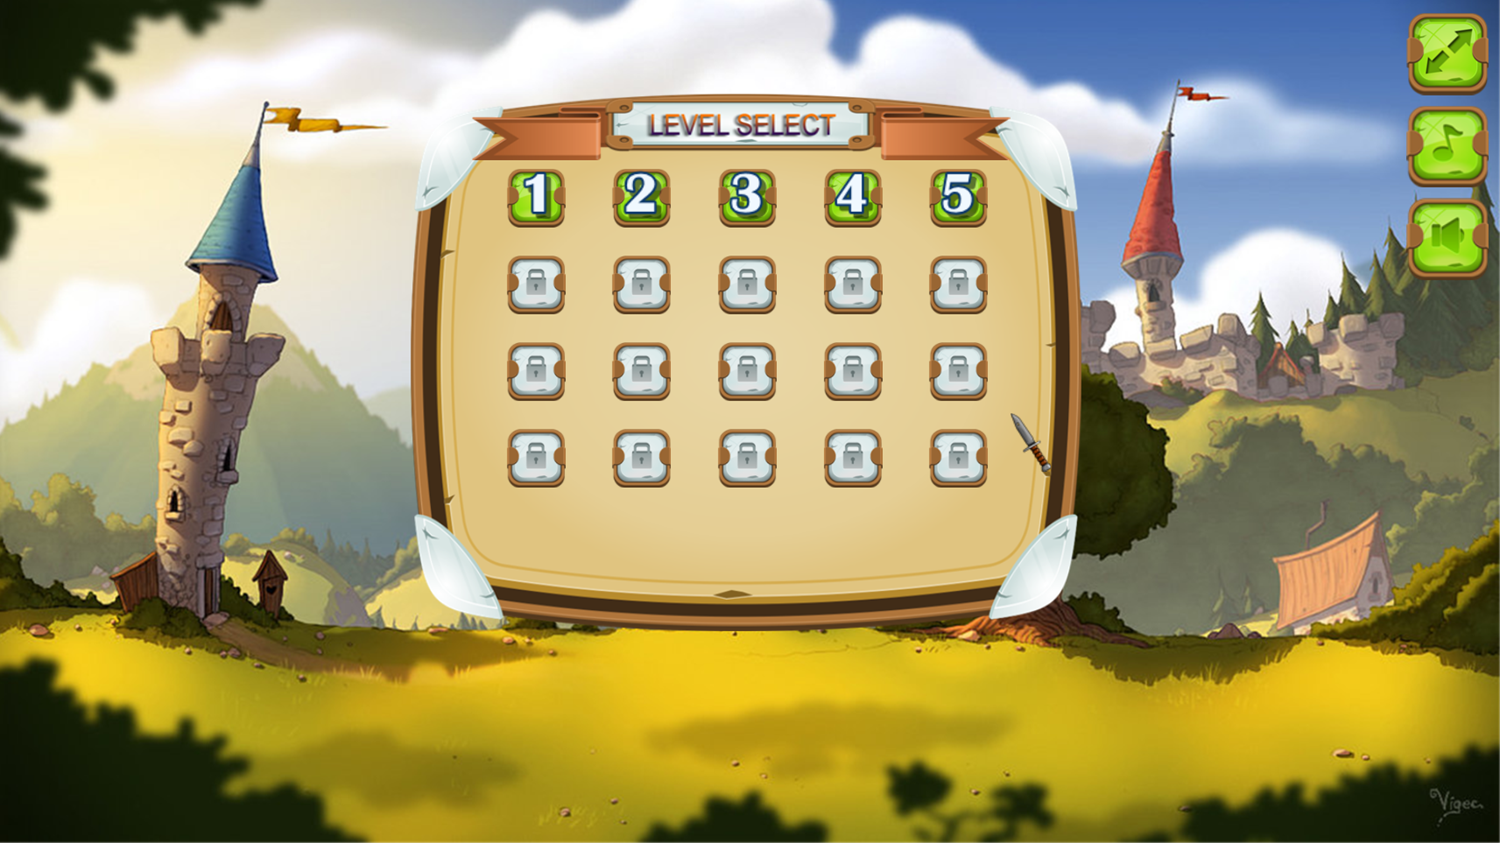 Green Diamond Game Level Select Screenshot.